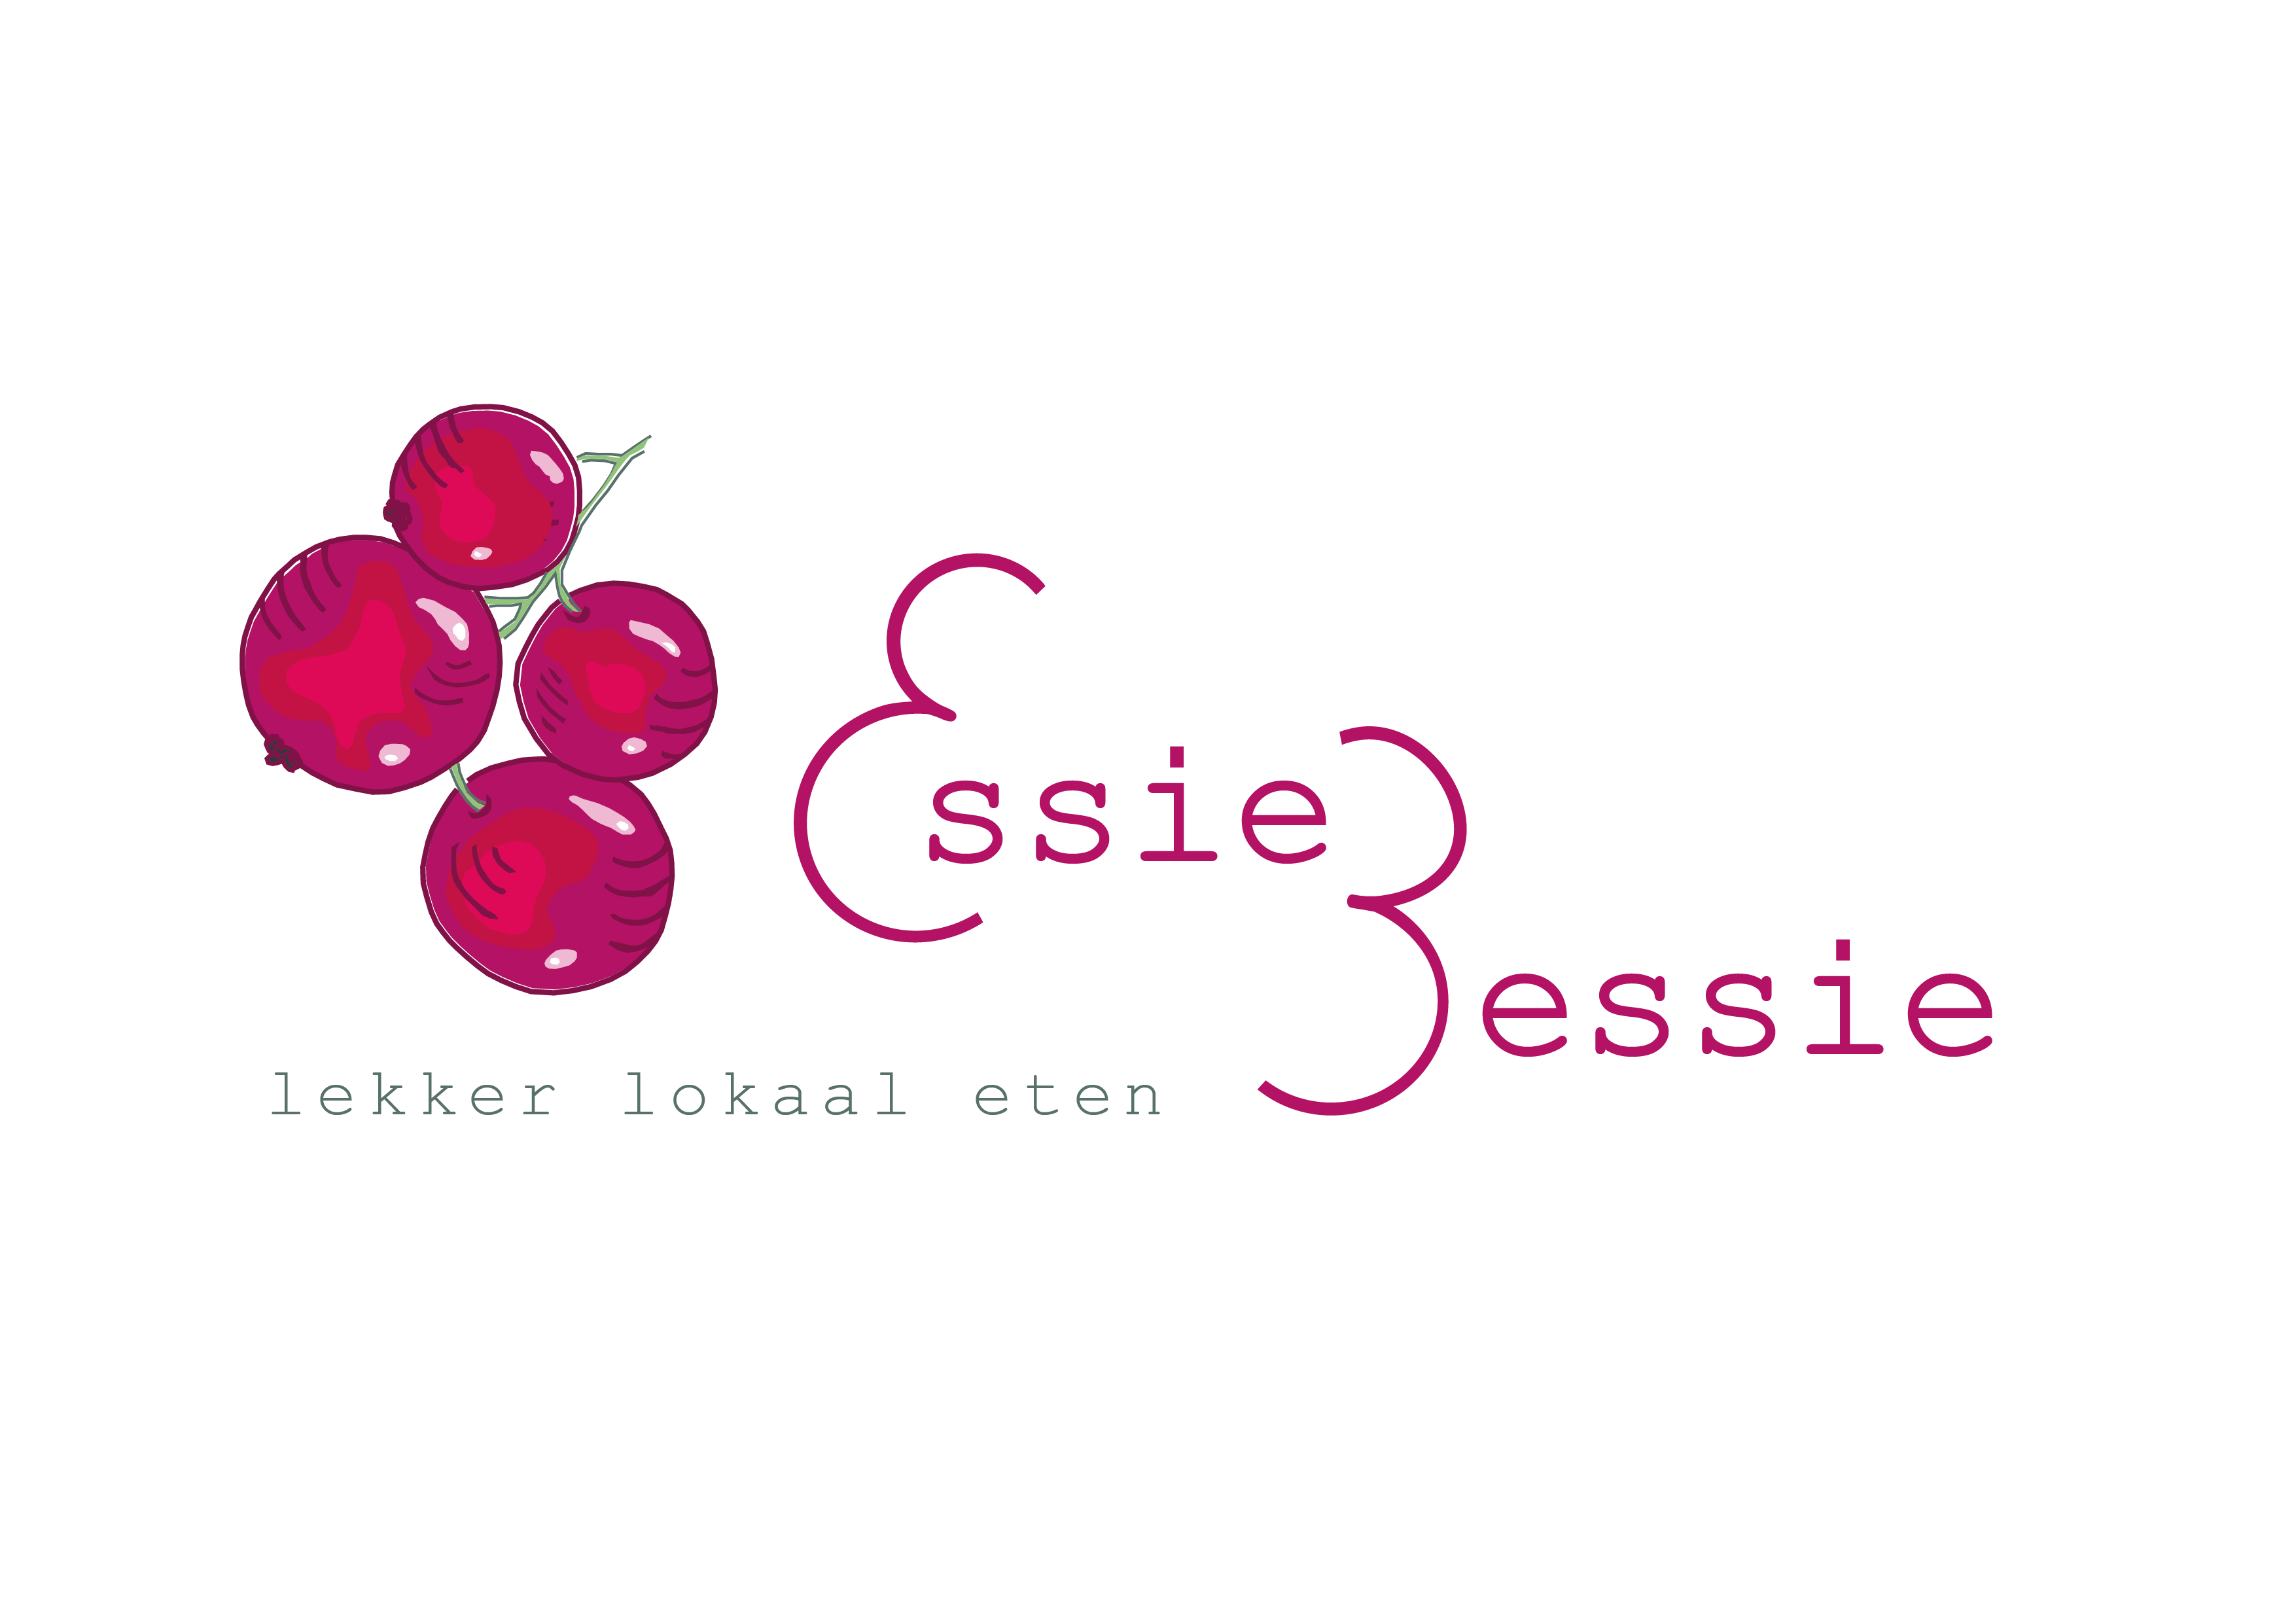 Essie Bessie - lekker lokaal eten